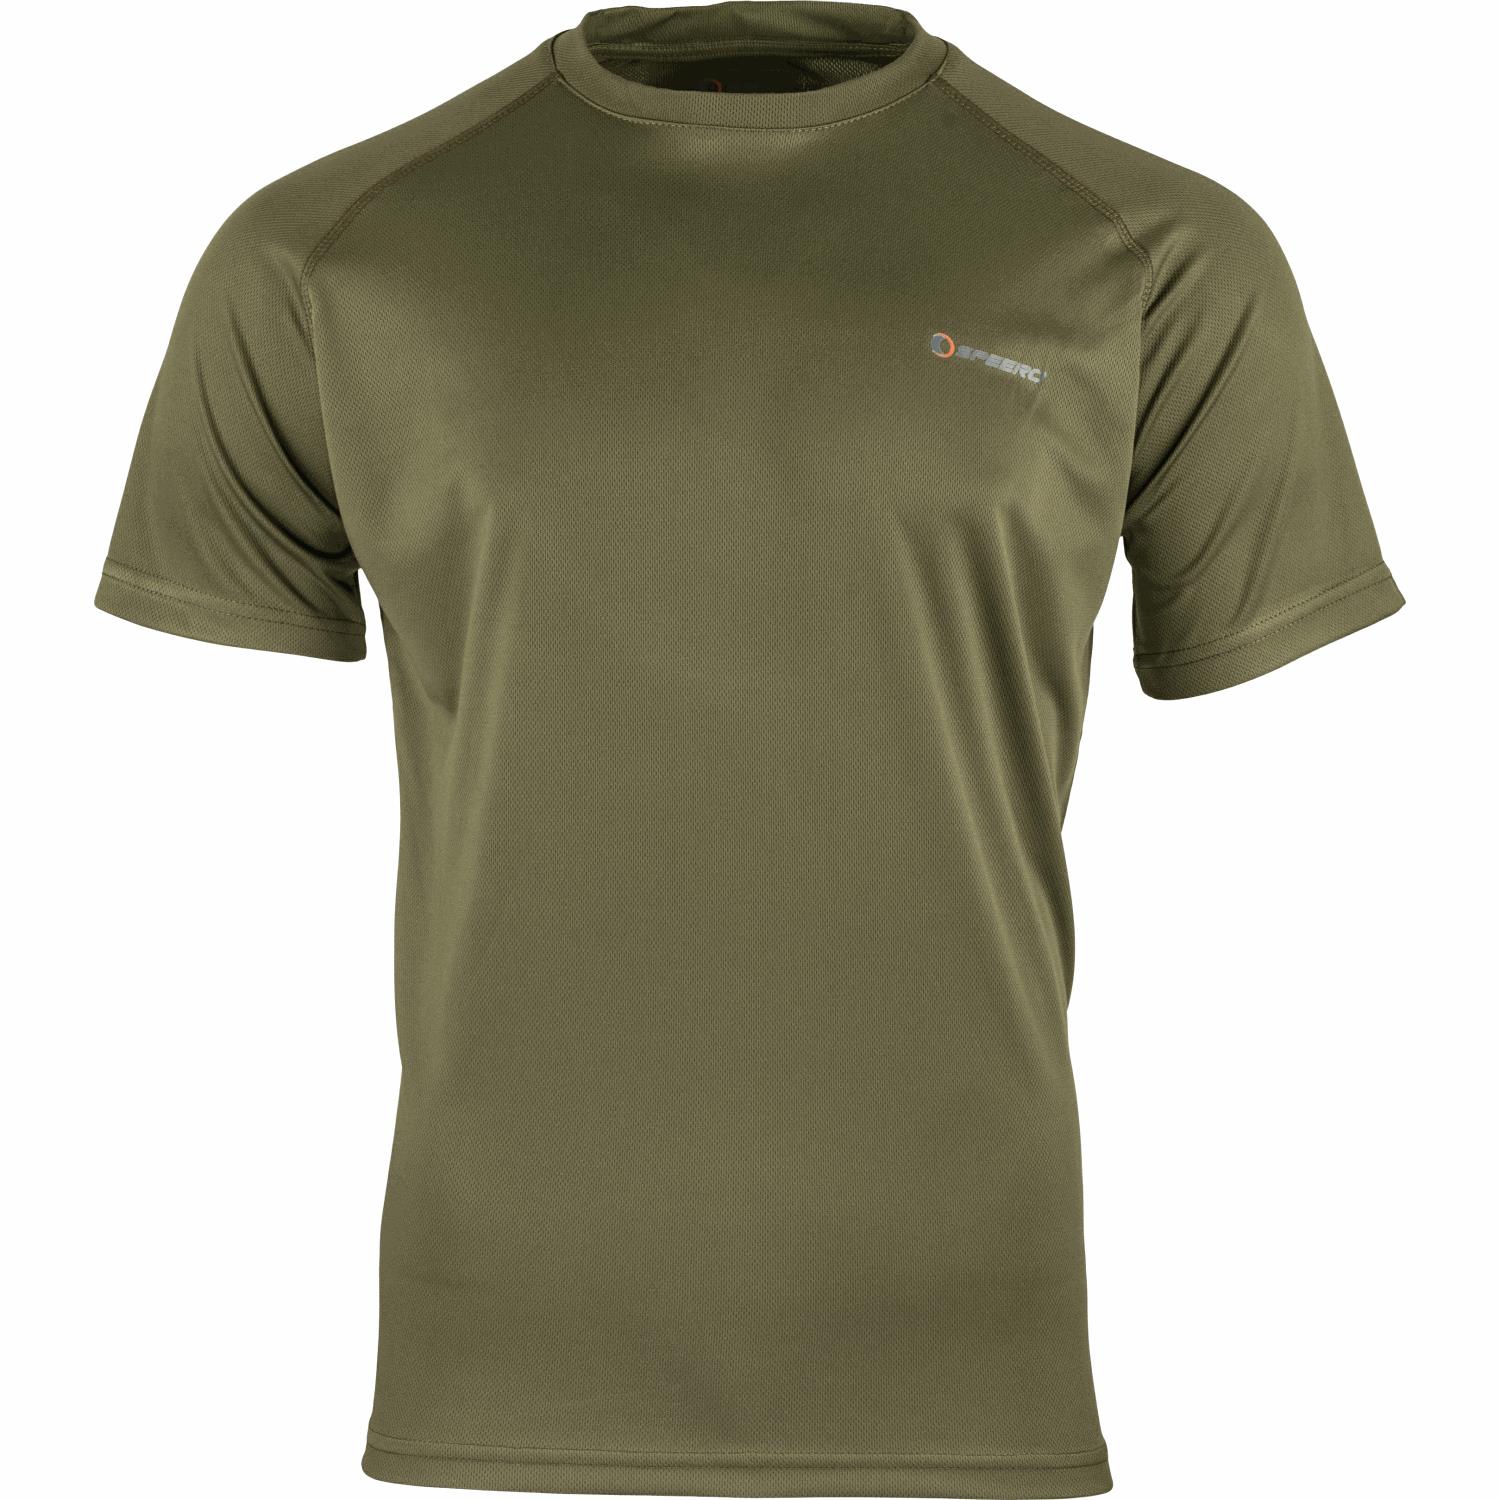 Speero T-Shirt Fishing Short Sleeve Top Green DPM Camo Outdoor